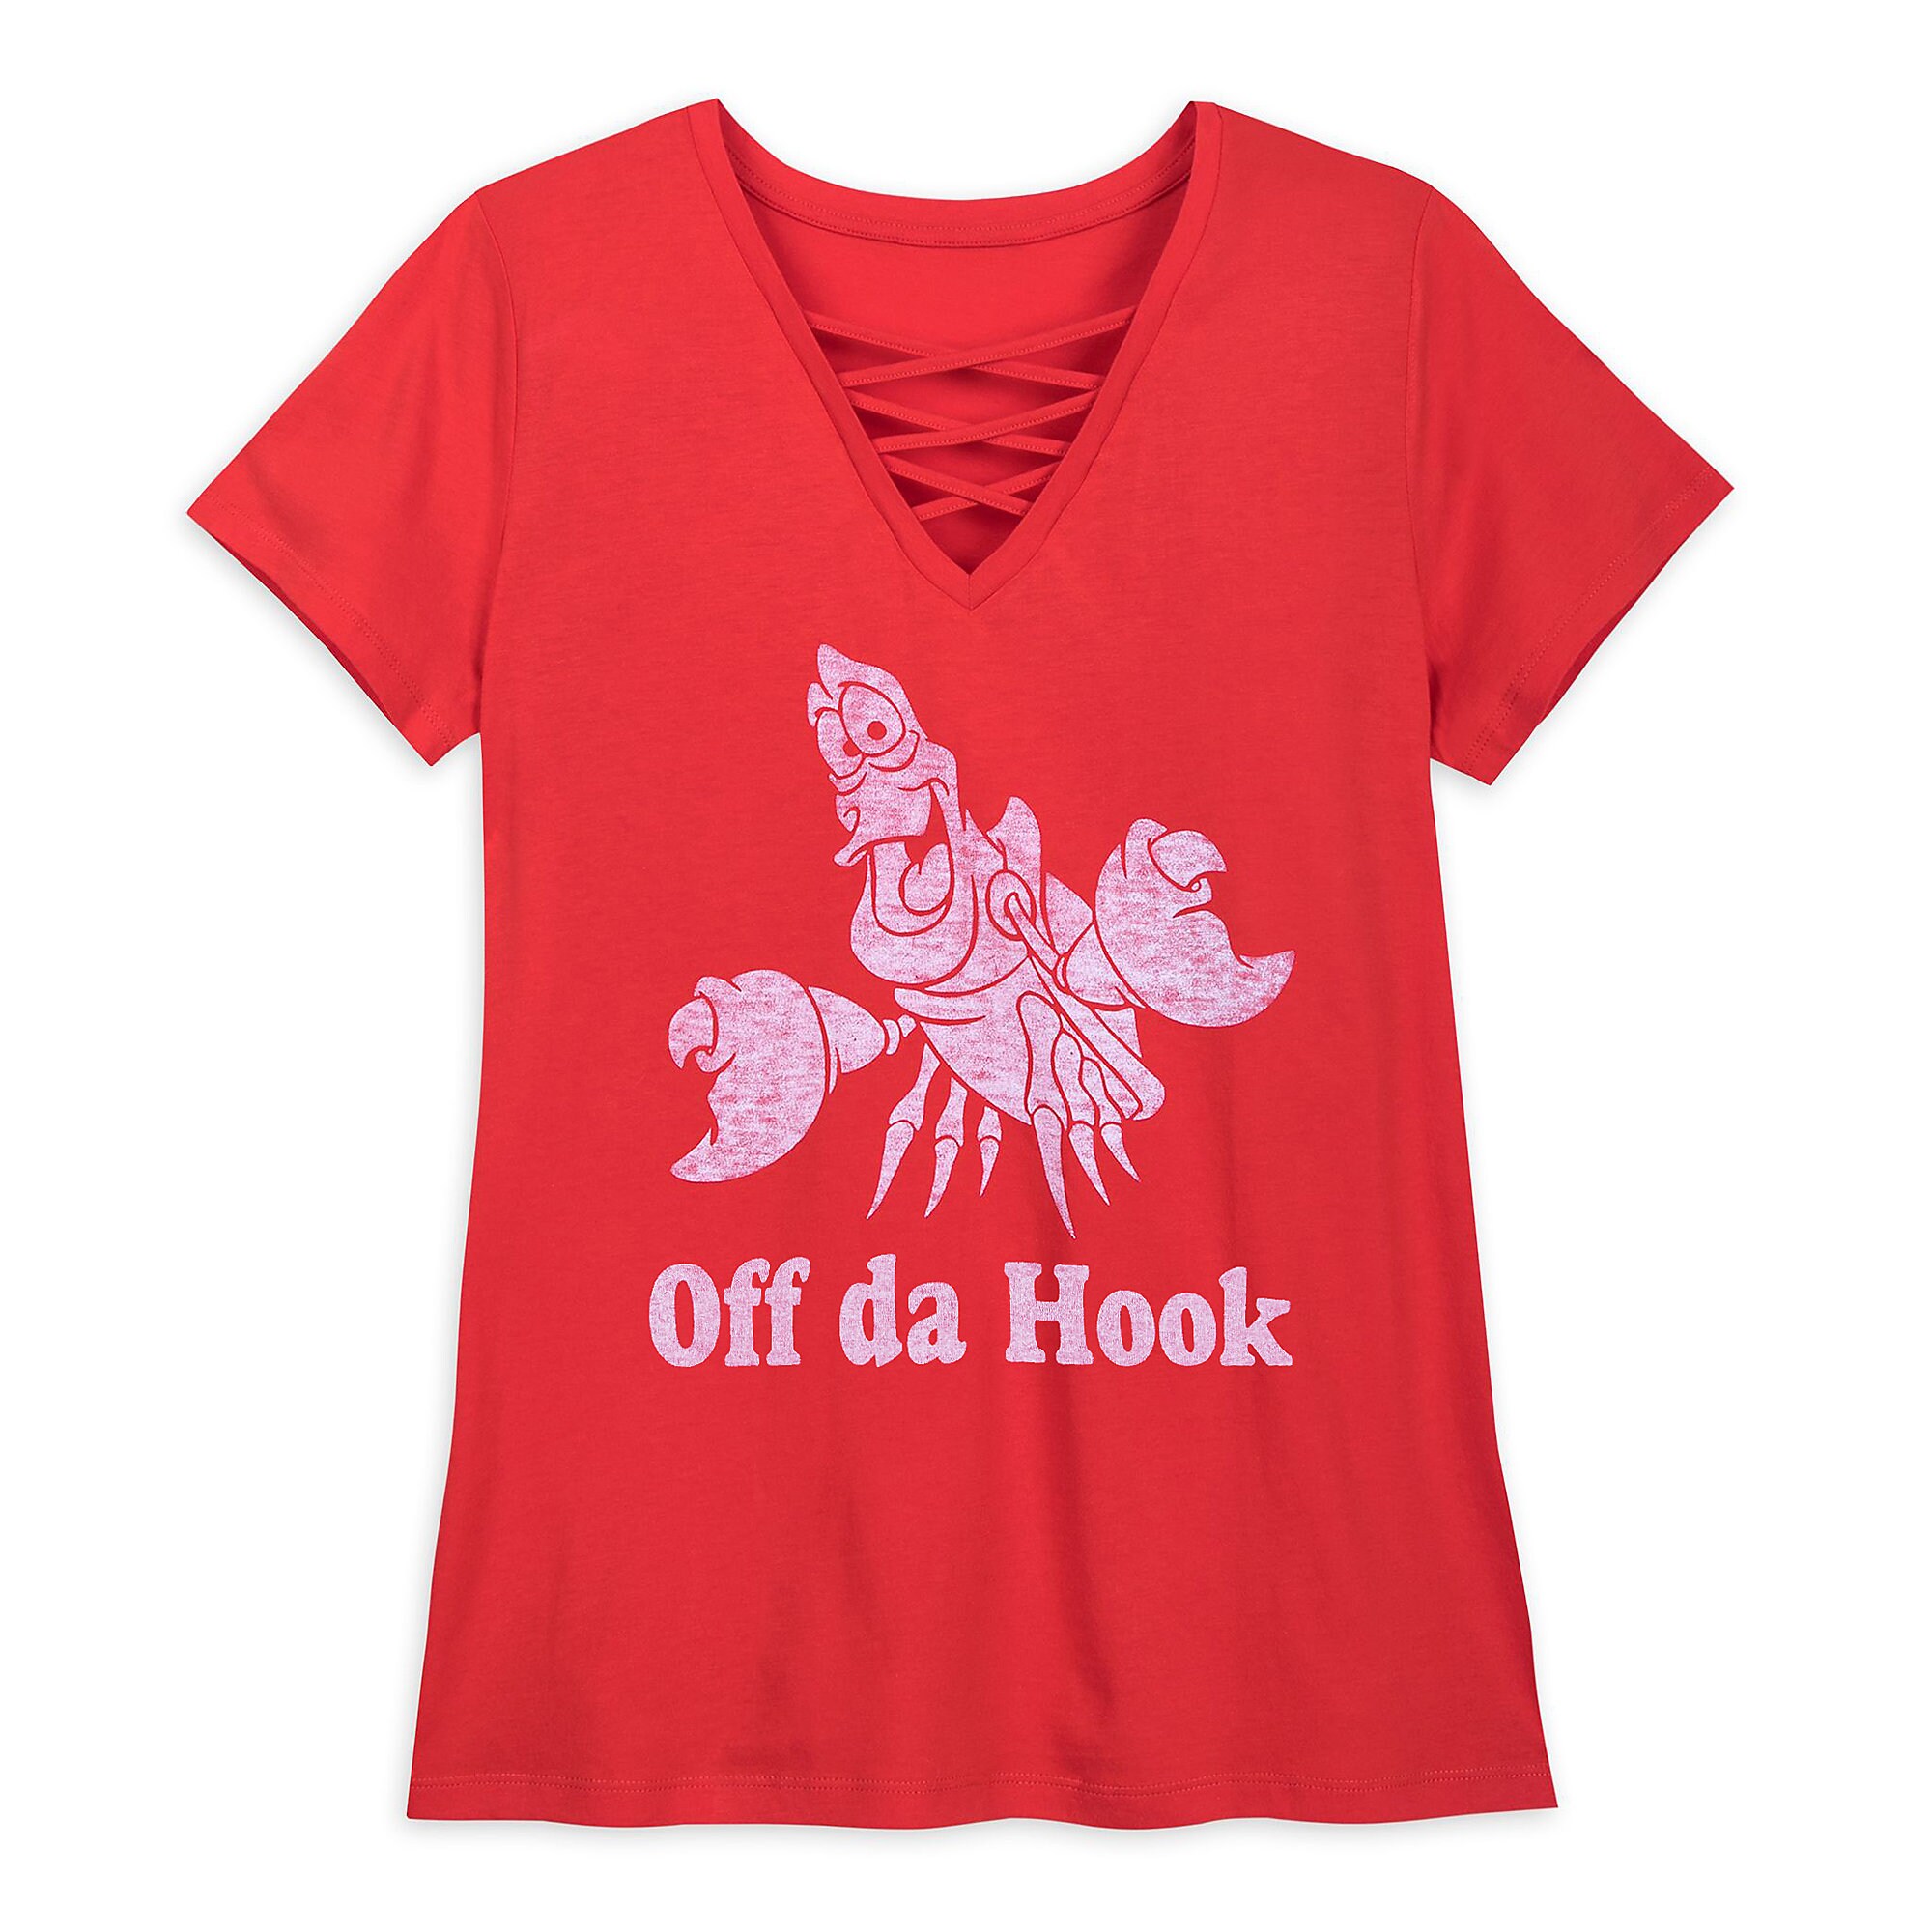 Sebastian Fashion T-shirt for Women by Junk Food - The Little Mermaid